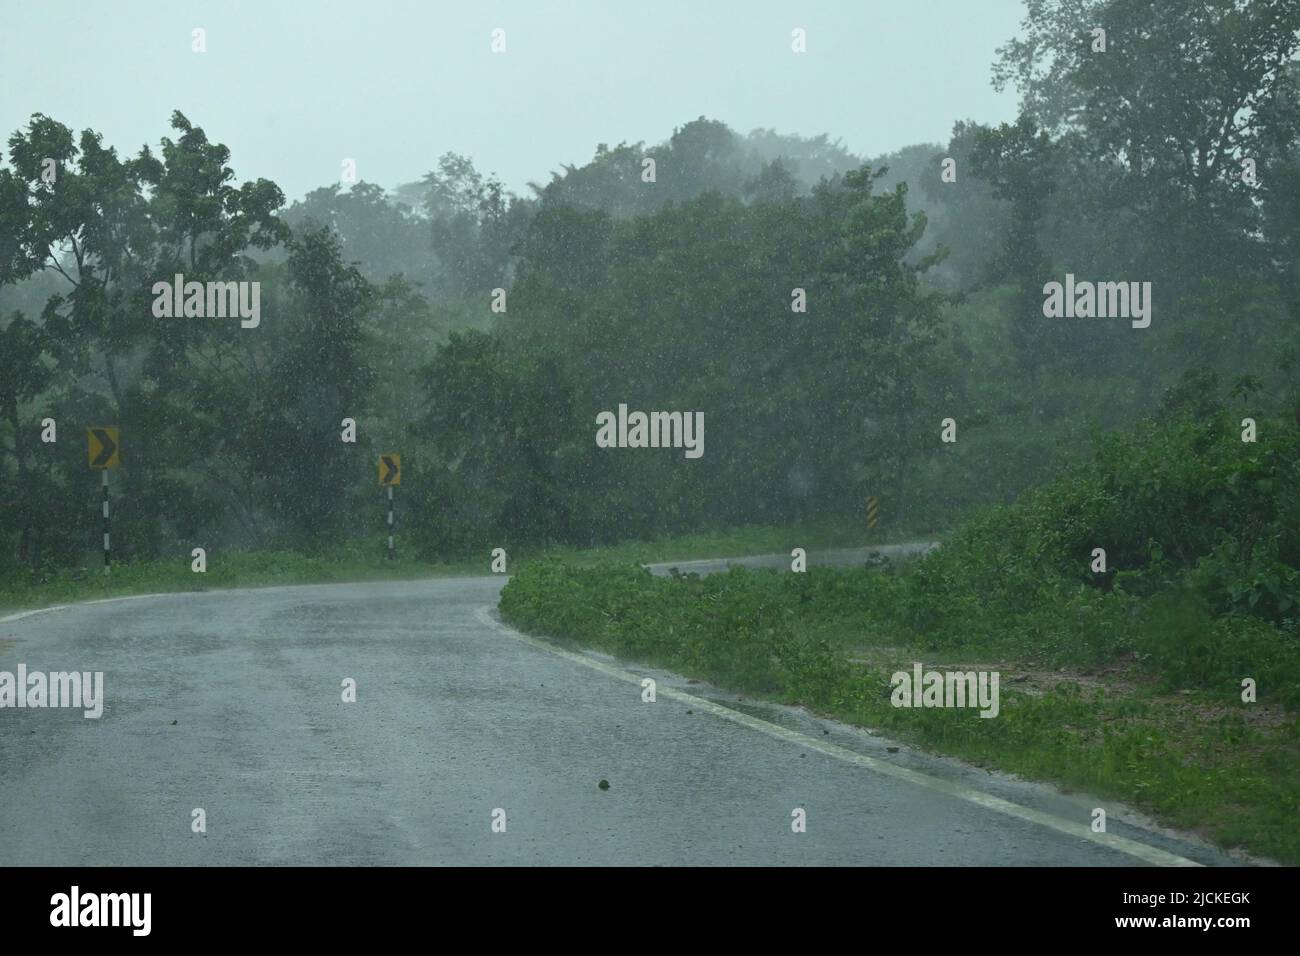 The rainy season on the roadside with lush greenery. Stock Photo